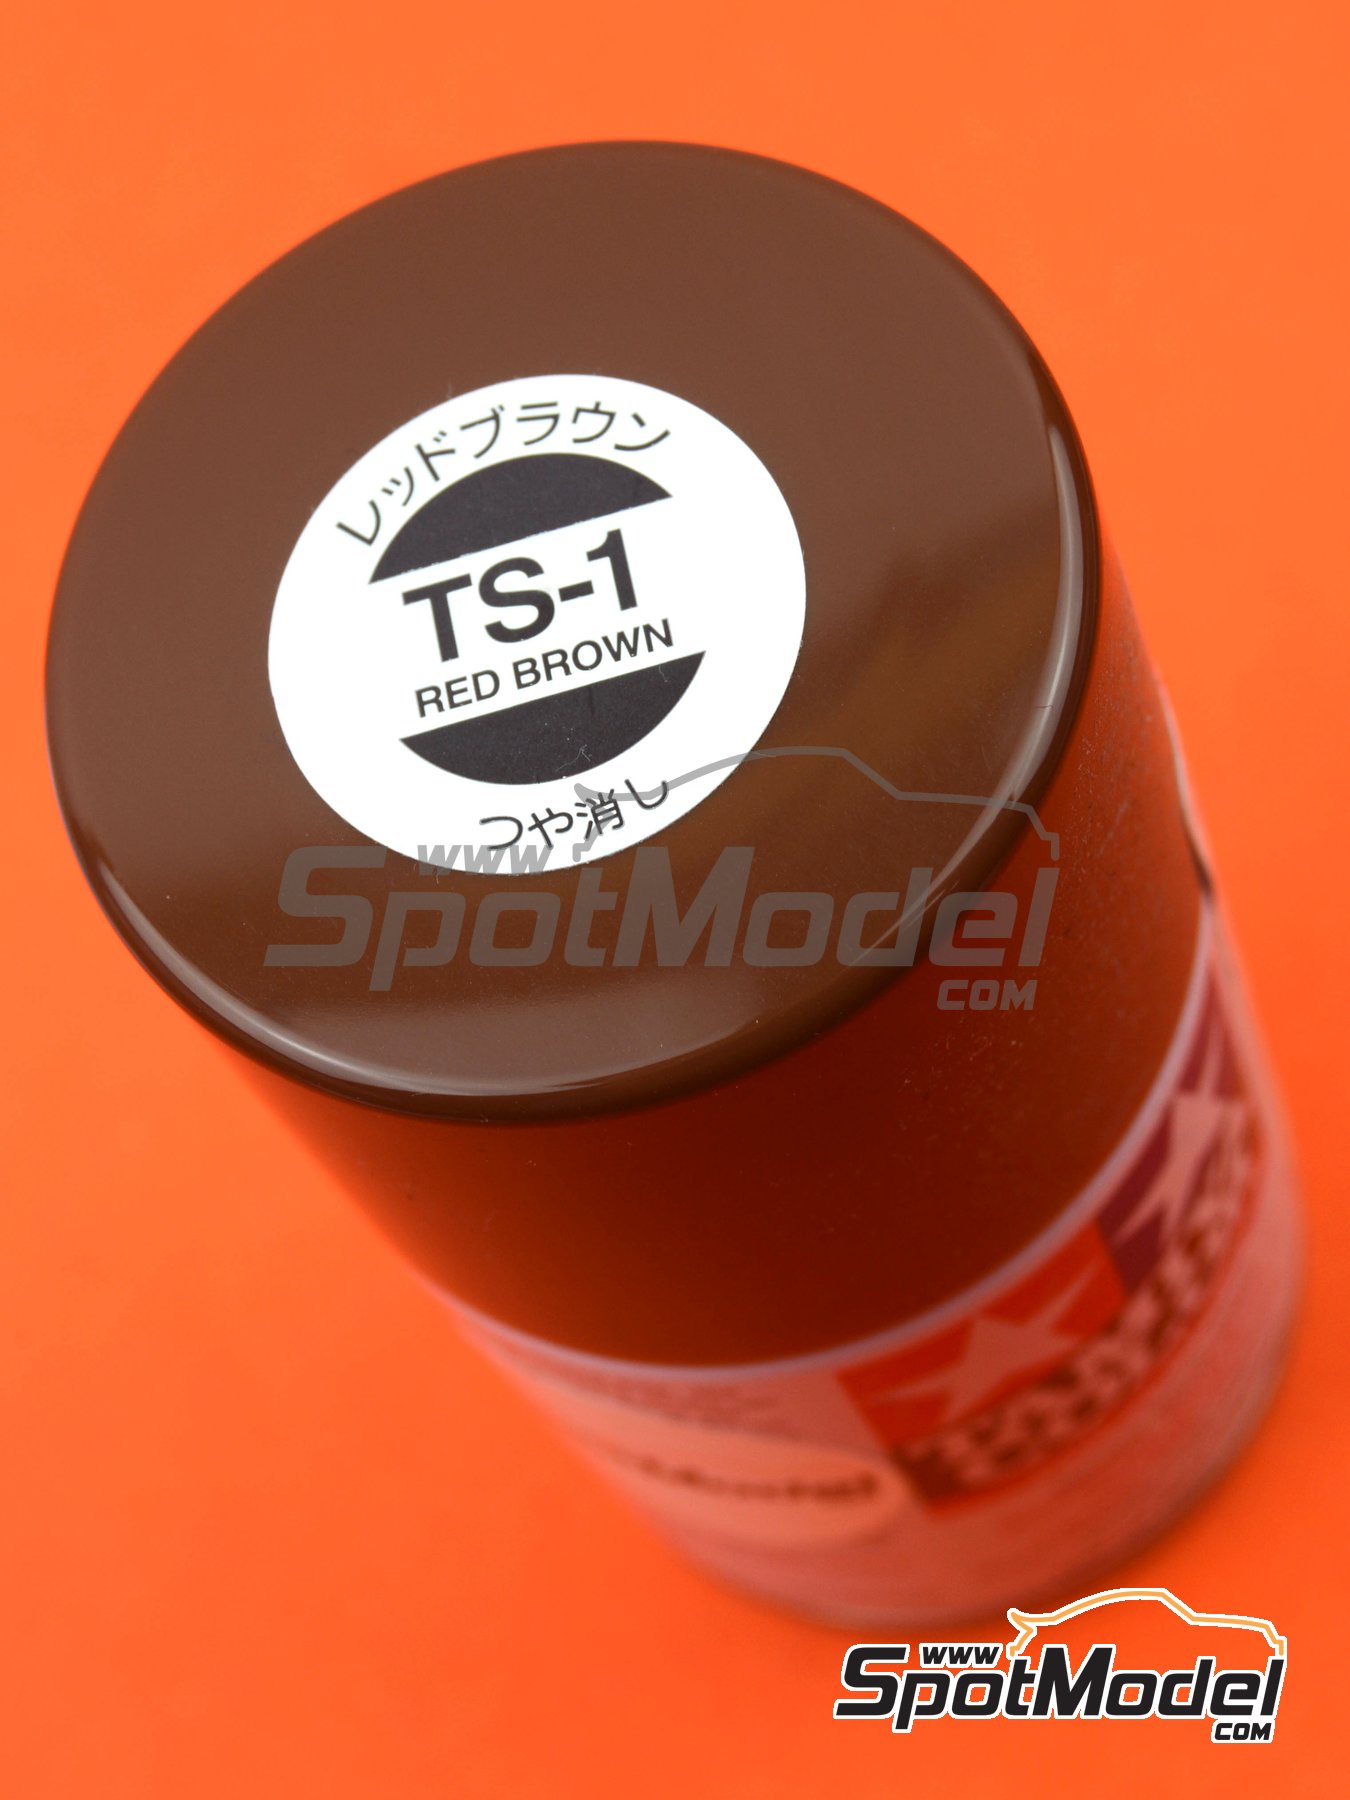 For Tamiya Plastic Model Paint Spray Gun Spray Paint Tool Spray